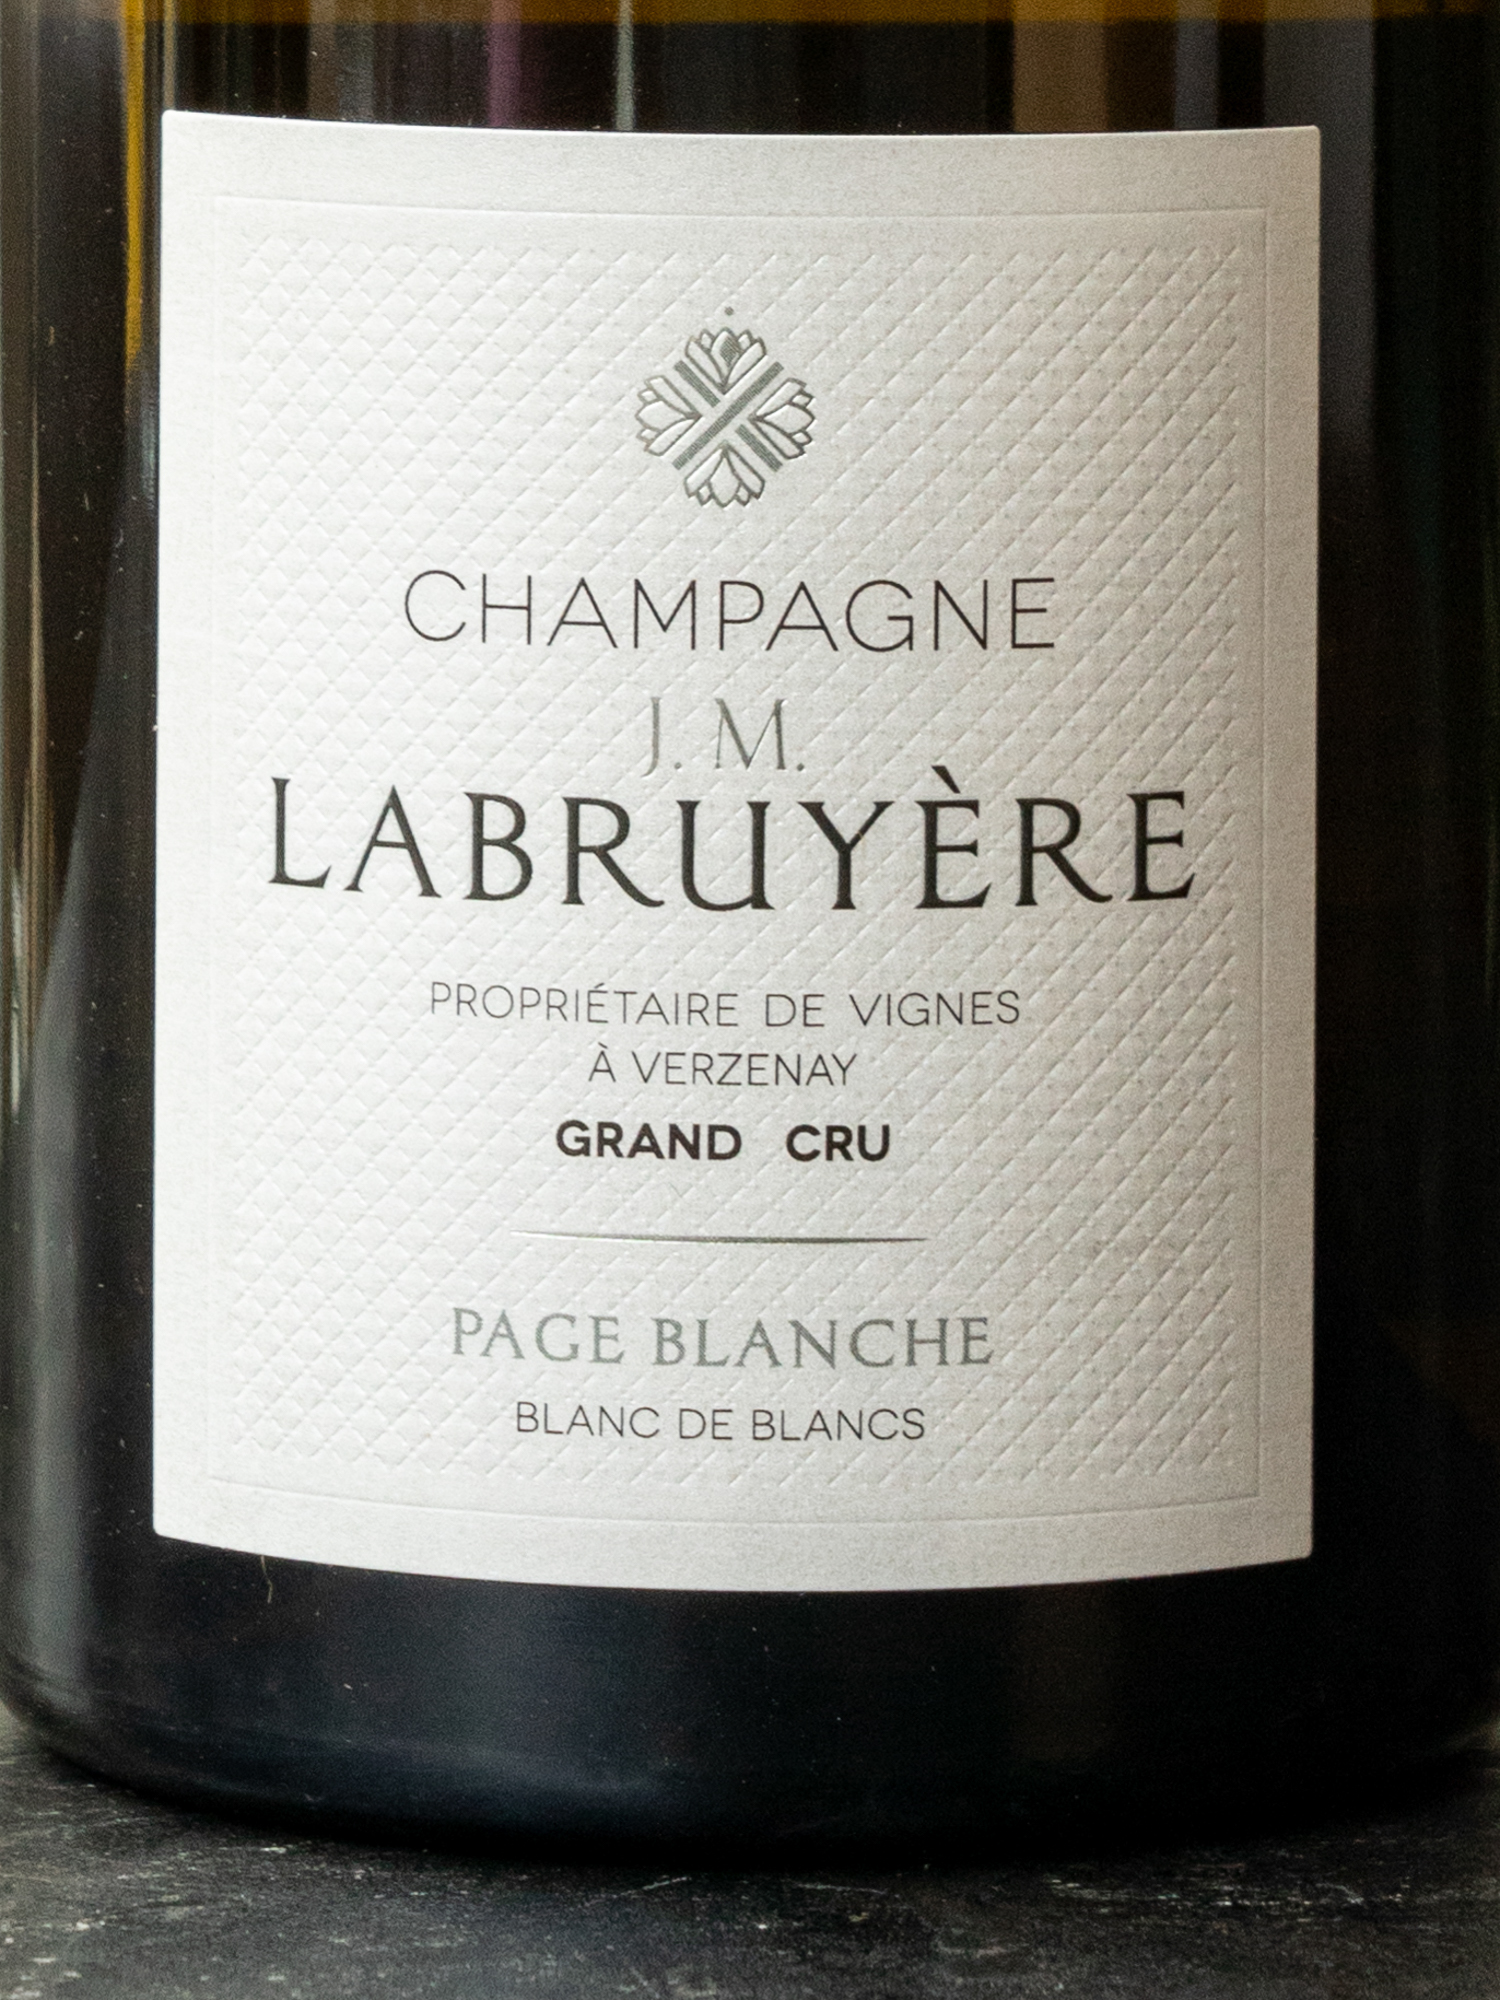 Этикетка J.M. Labruyere Champagne Grand Cru Page Blanche Blanc de Blancs